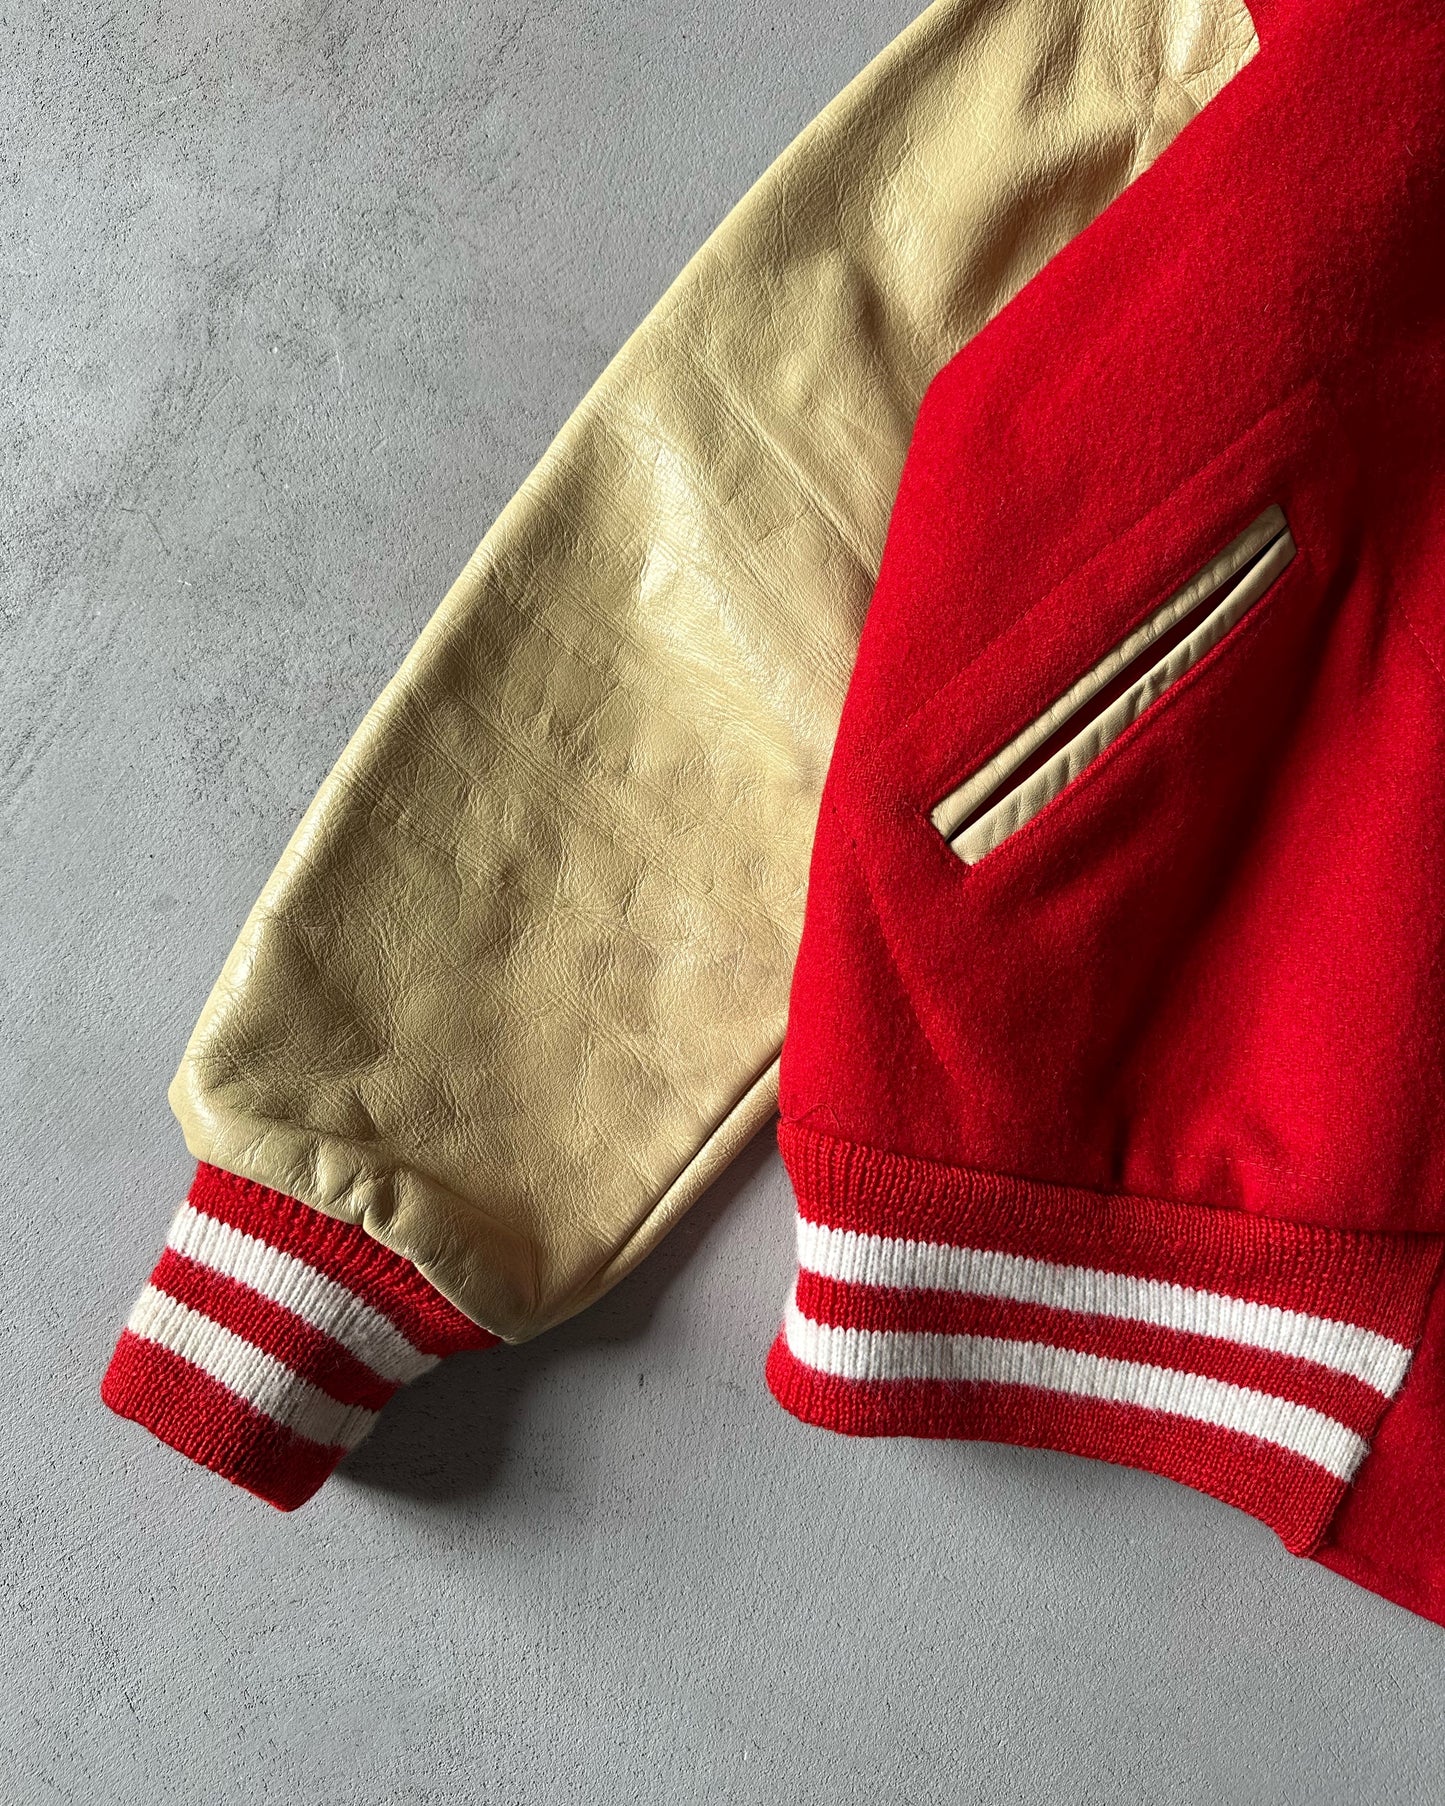 1970s - Red/Beige "St. Joseph" Varsity Jacket - L